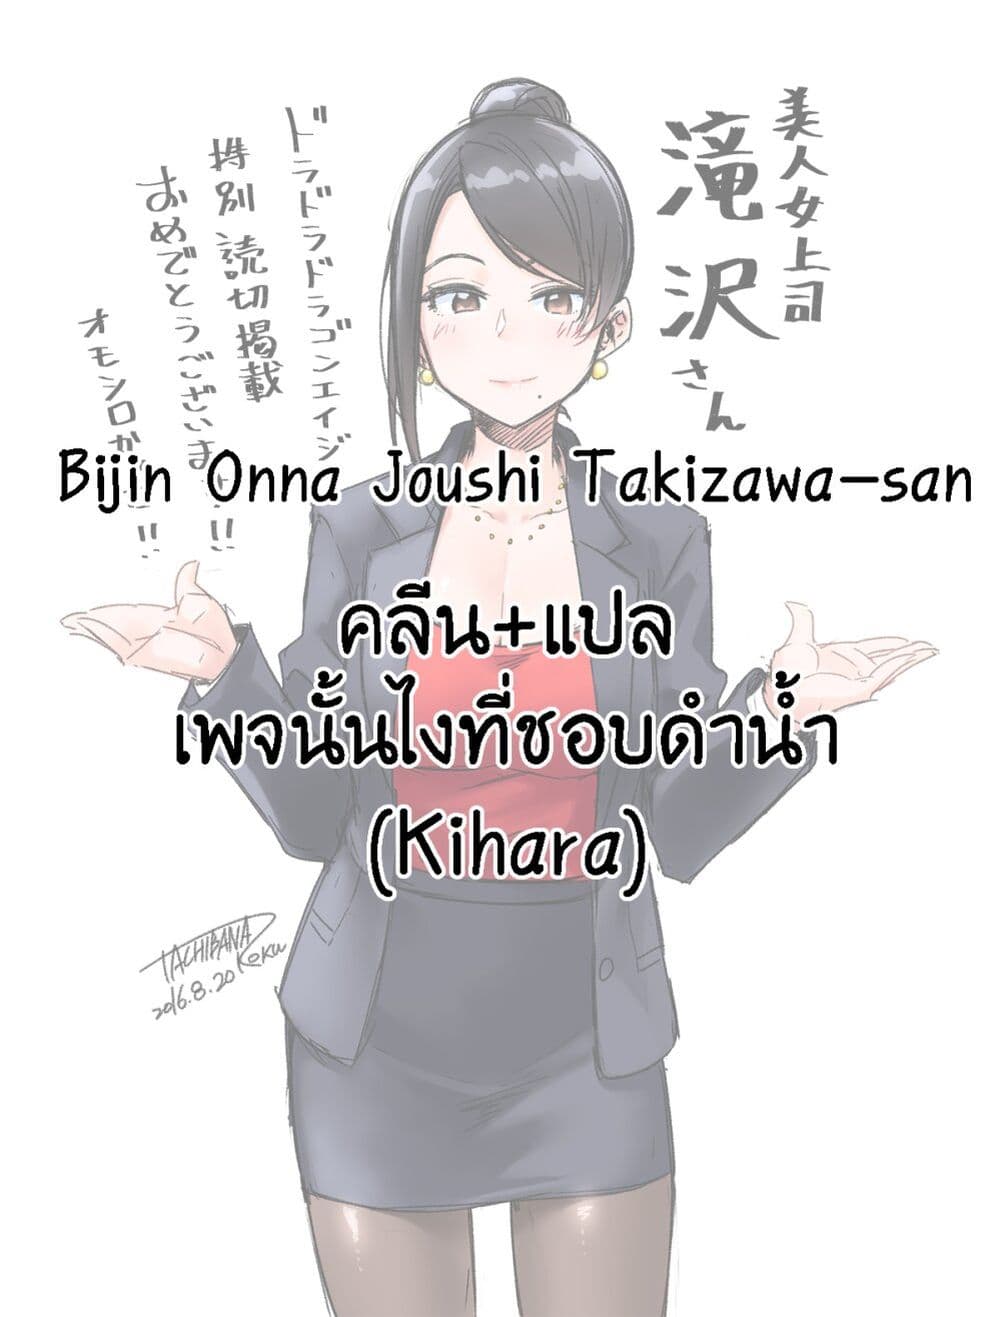 Bijin Onna Joushi Takizawa-san หัวหน้าสุดสวย ทากิซาวะซัง 12-12